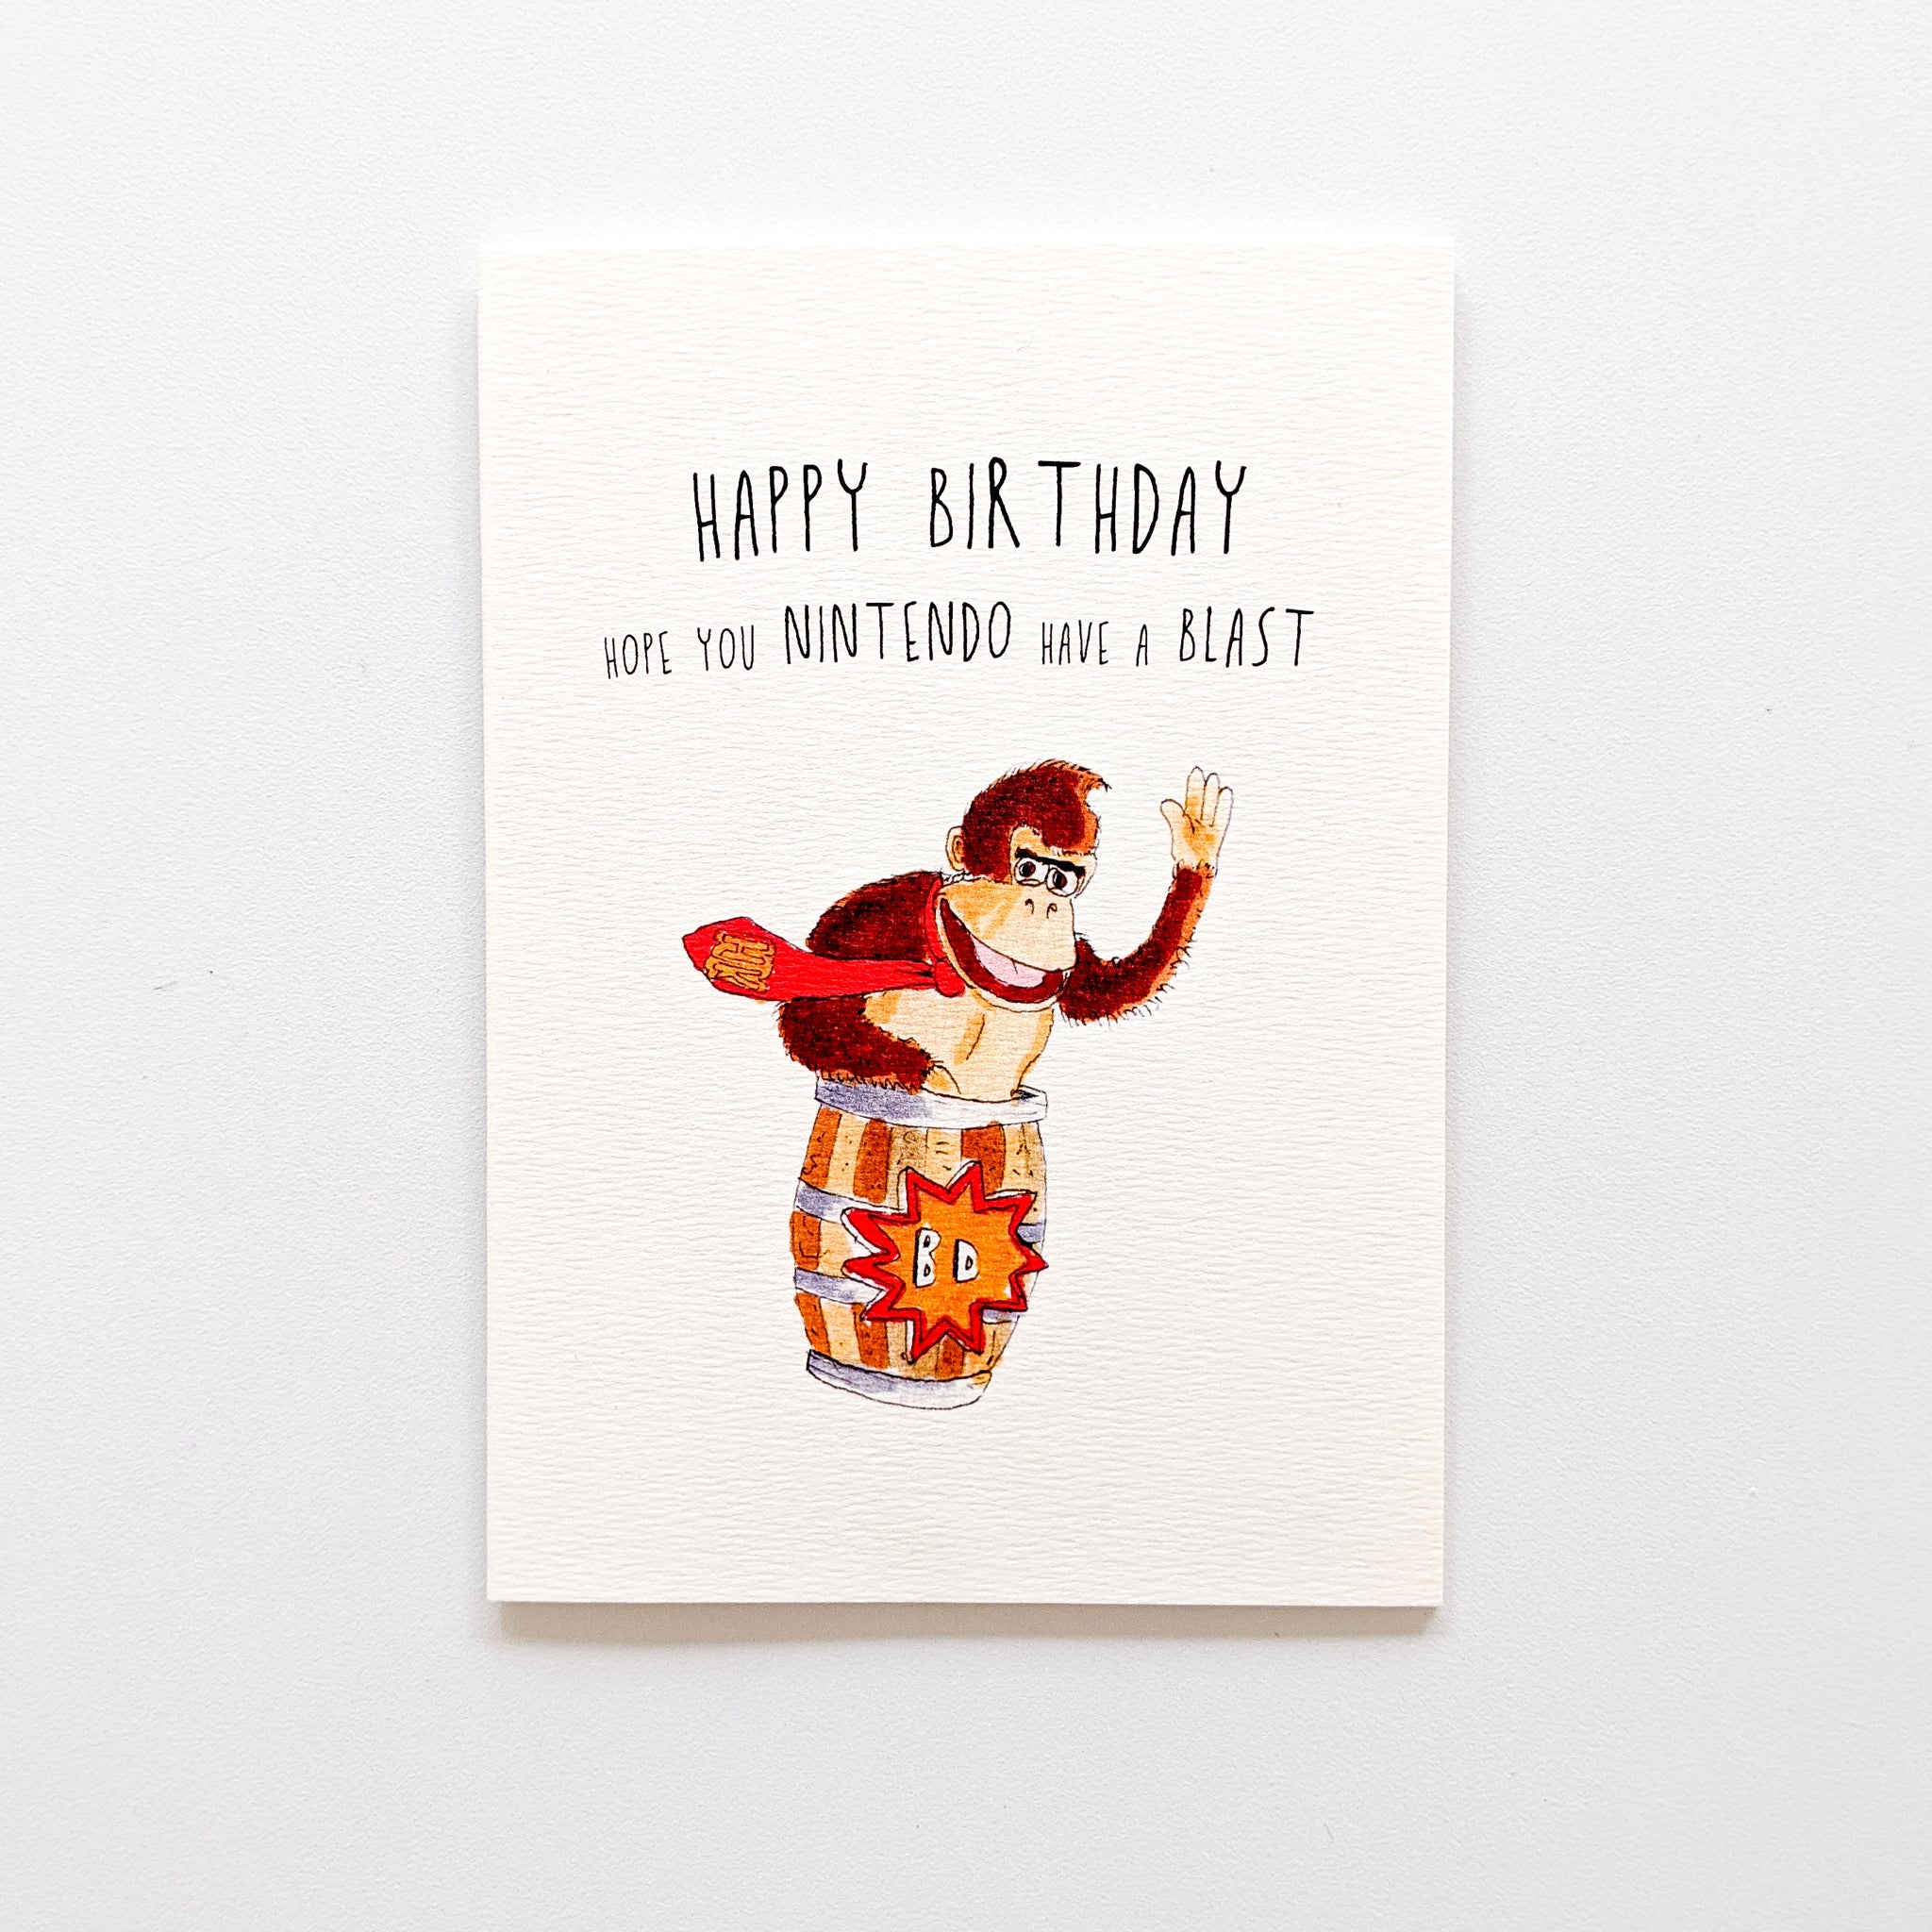 Happy Birthday, Hope you Nintendo Have a Blast | Happy Birthday Cards | Greeting Cards